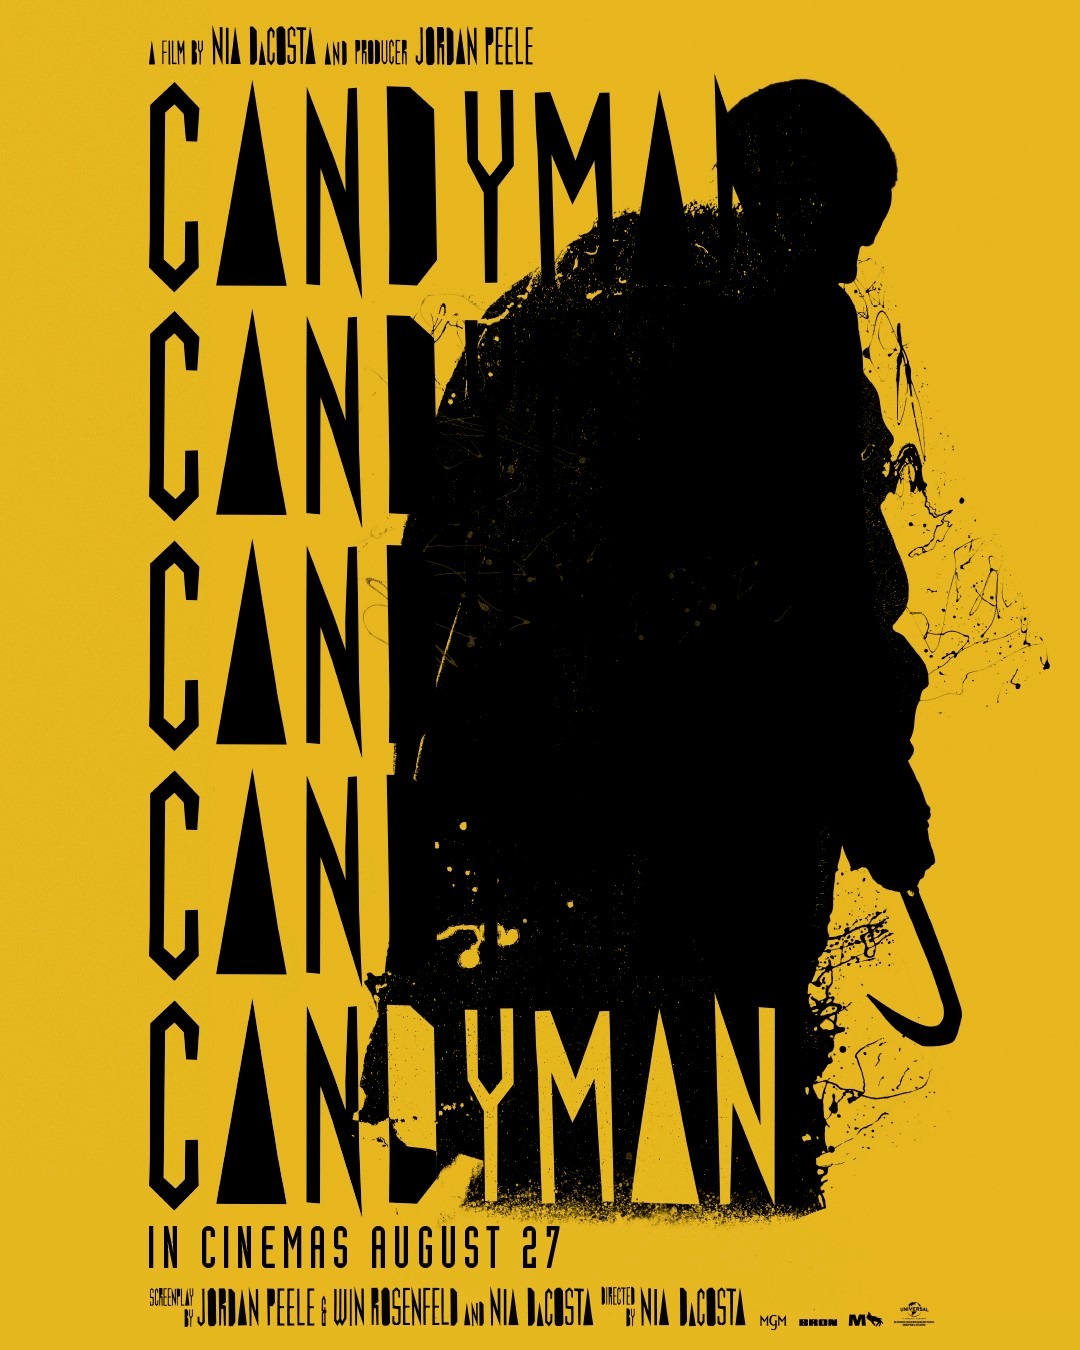 Candyman | NBC